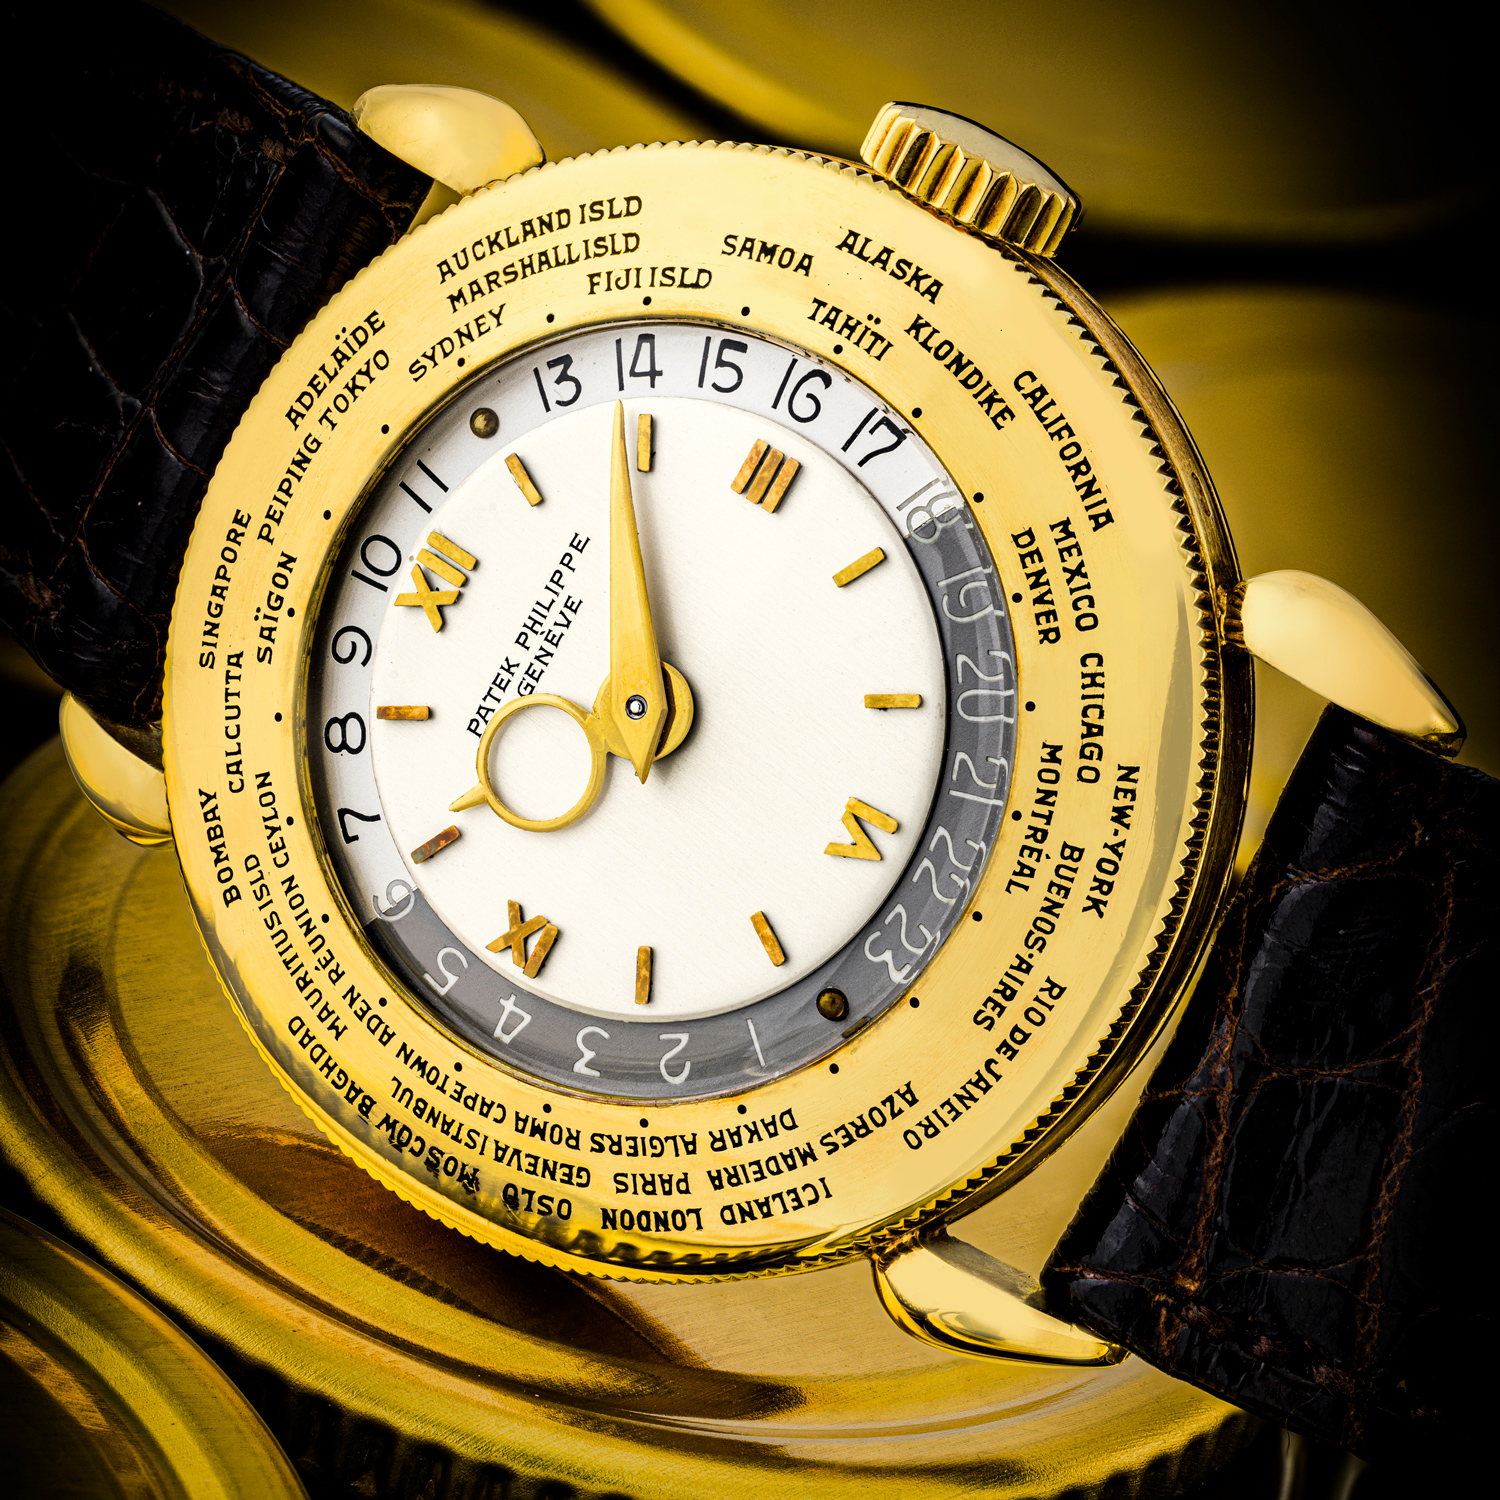 Lot 2521: Patek Philippe 18k Gold Manual Winding World Time Wristwatch, manufactured in 1948